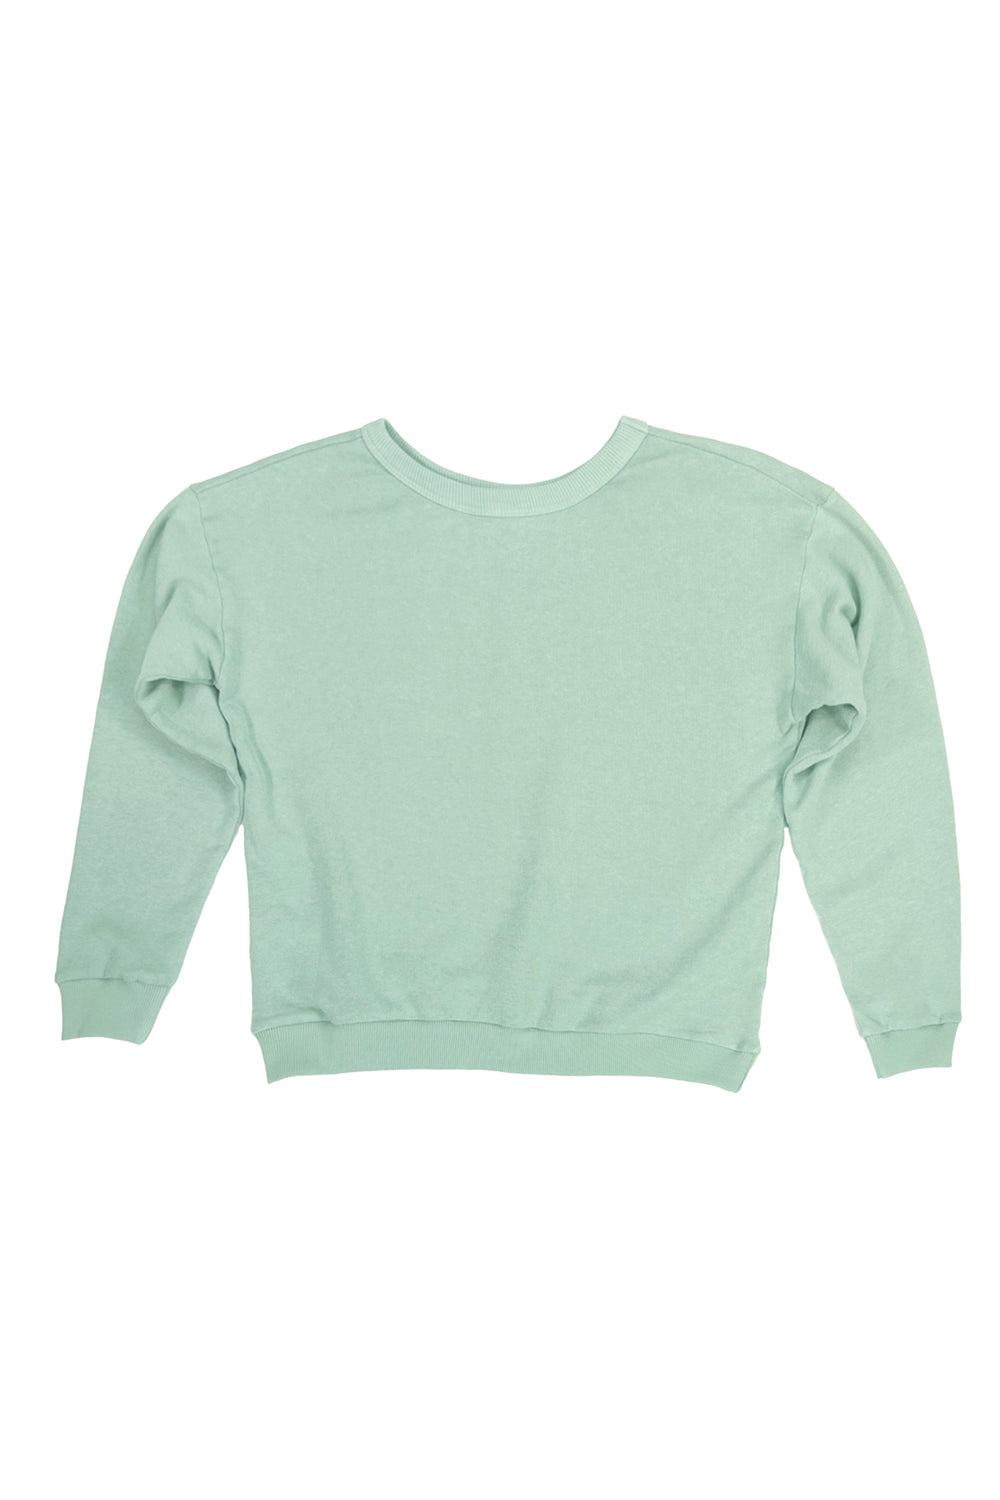 Crux Cropped Sweatshirt | Jungmaven Hemp Clothing & Accessories / Color: Sage Green